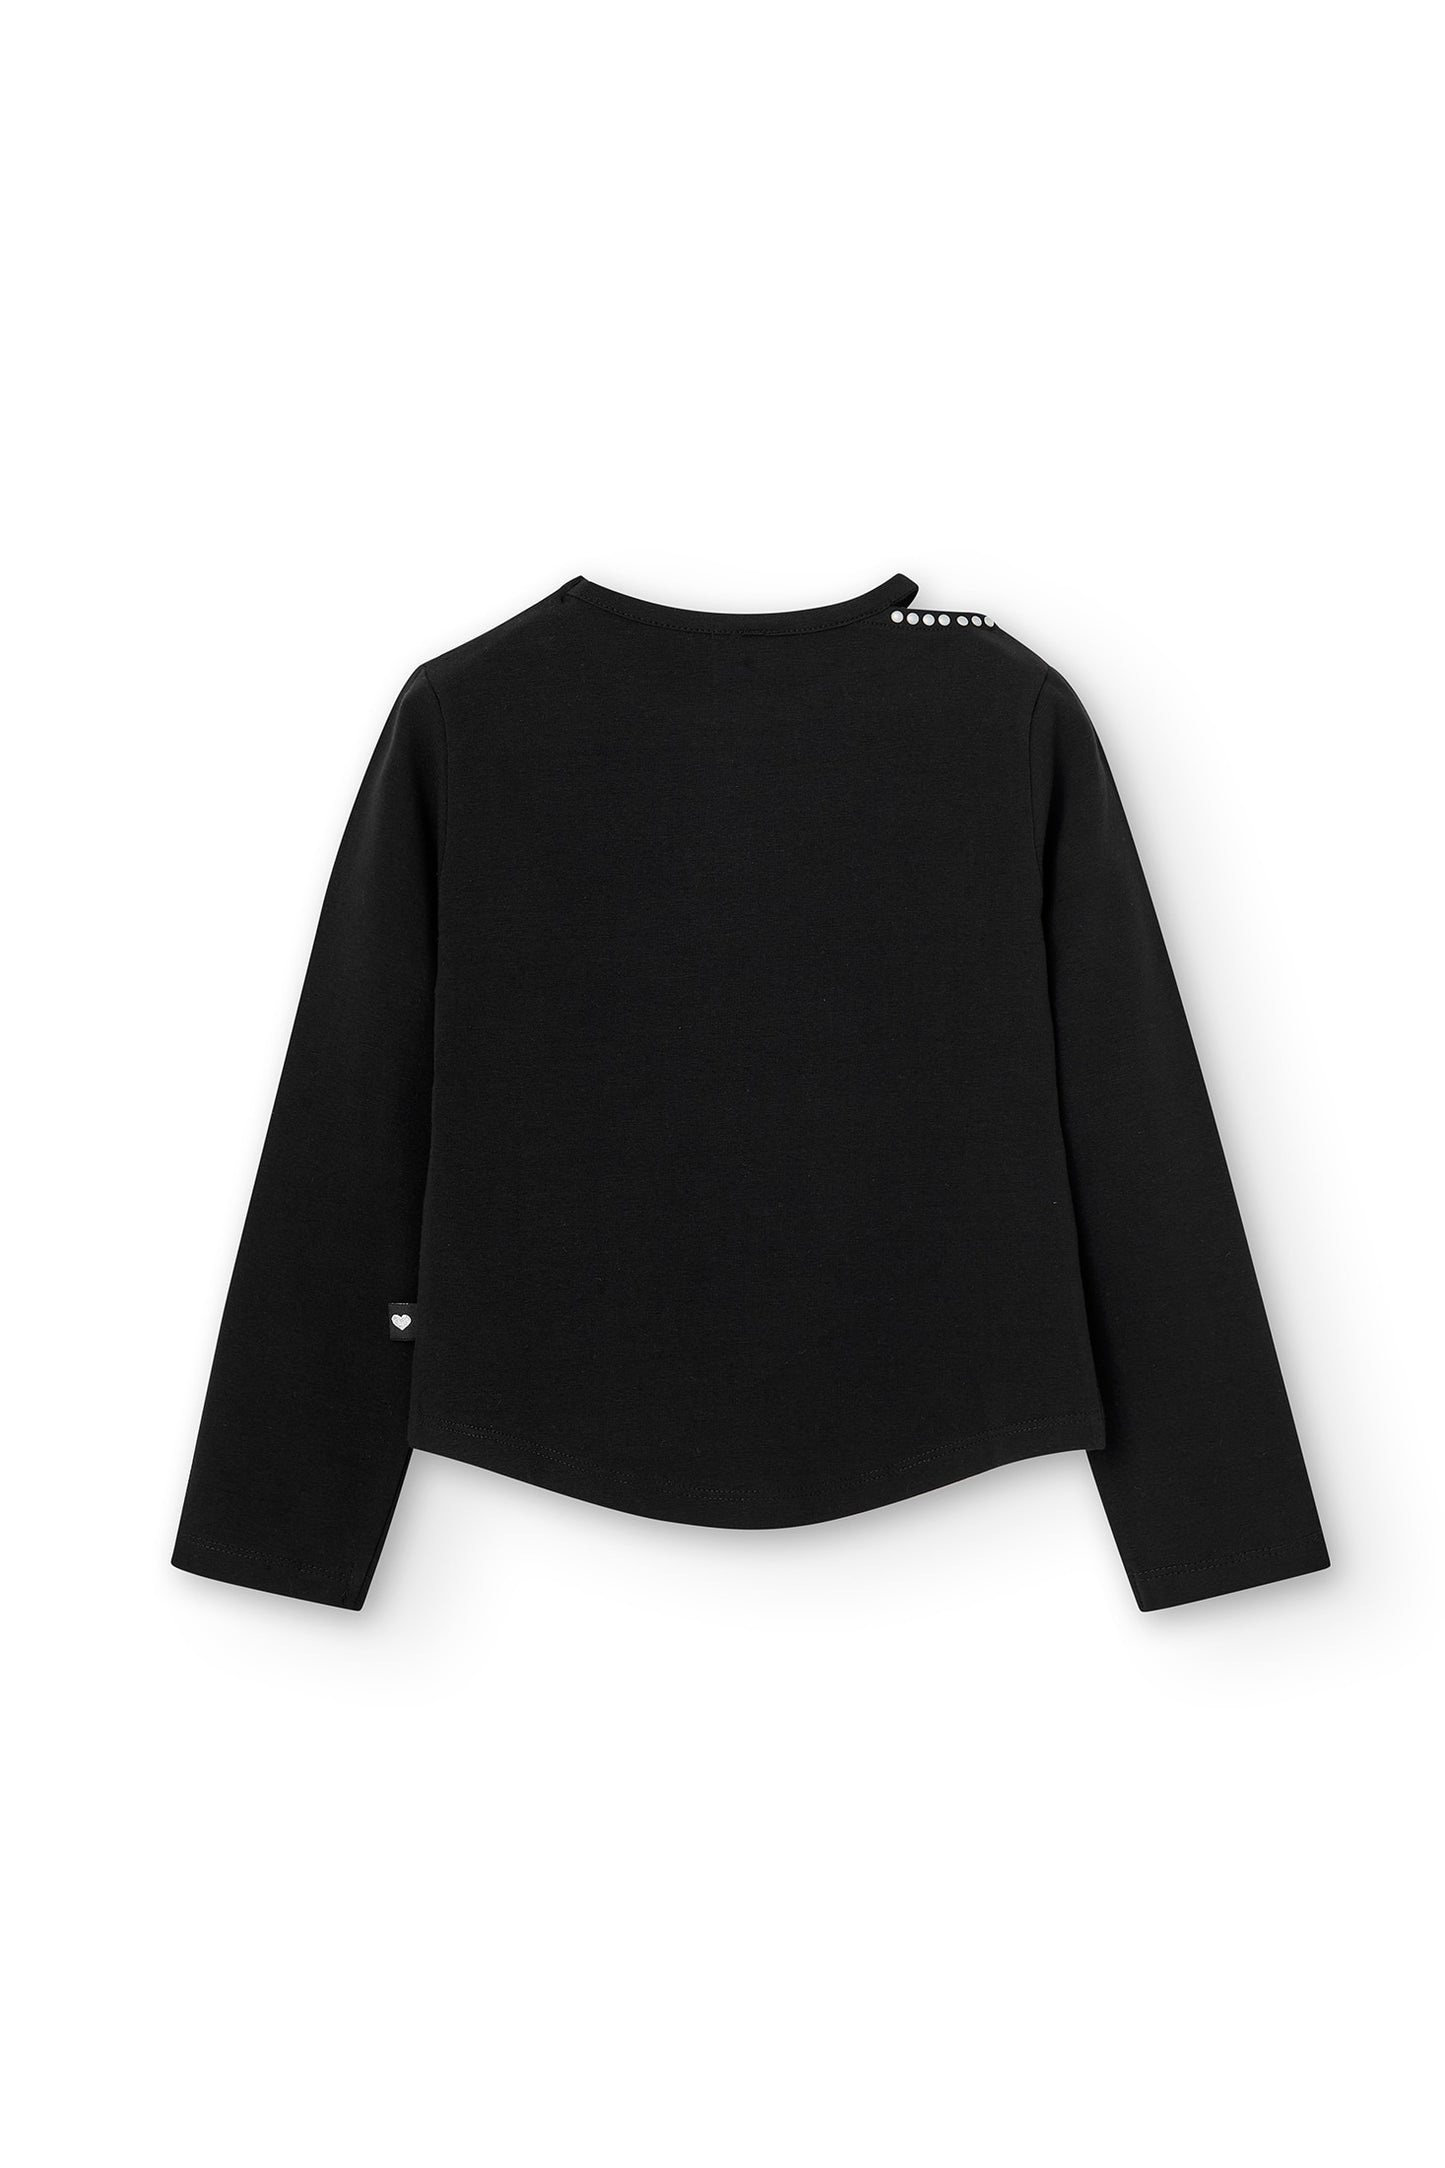 Boboli L/S Knit Shirt _Black 725486-890